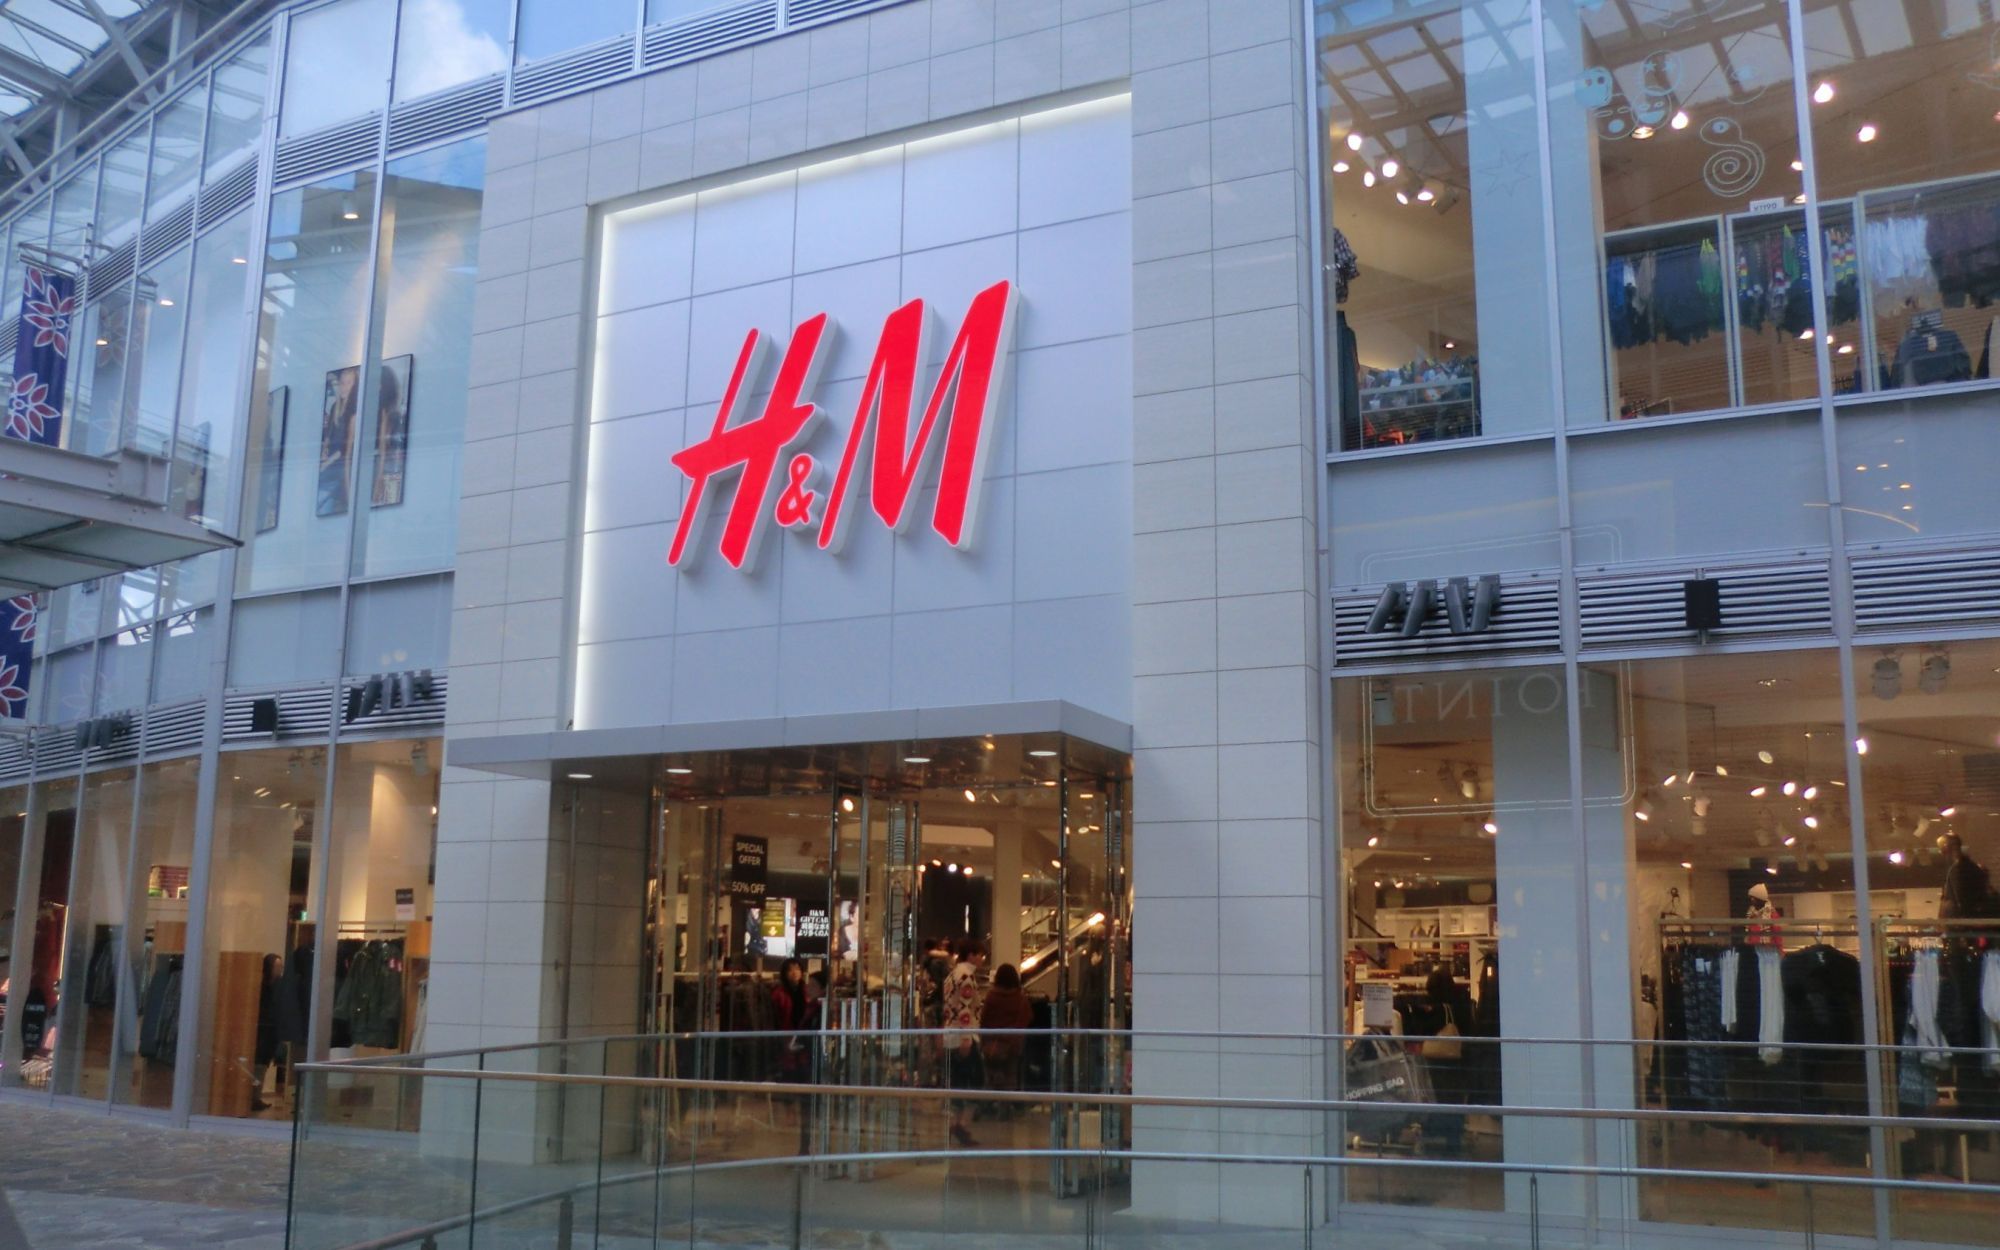 H&M advert: South Africans trash H&M stores, demanding 'racist